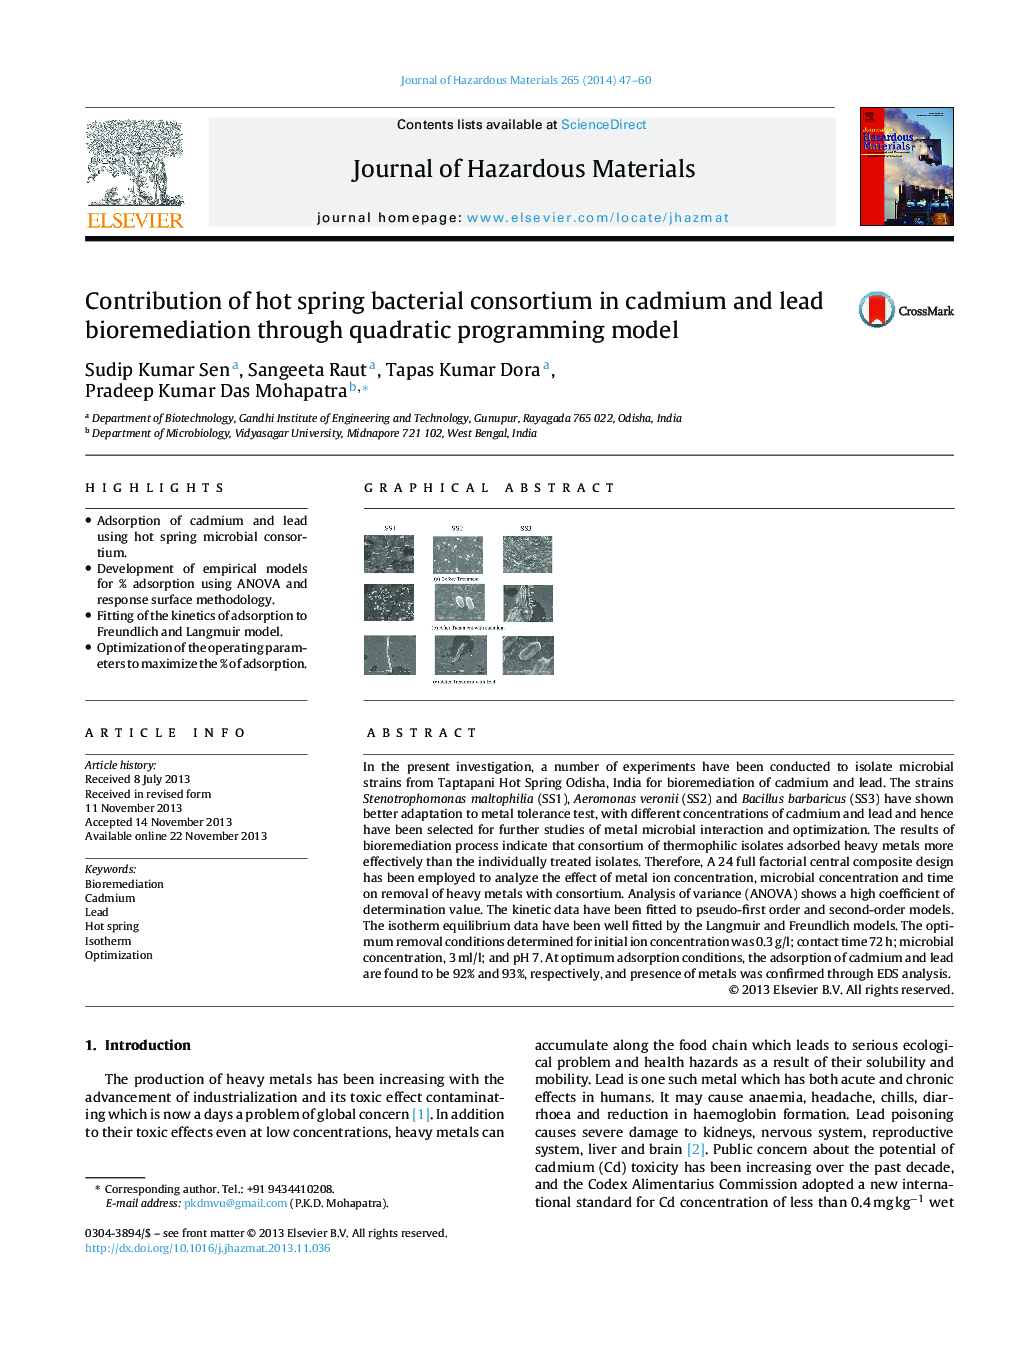 Contribution of hot spring bacterial consortium in cadmium and lead bioremediation through quadratic programming model